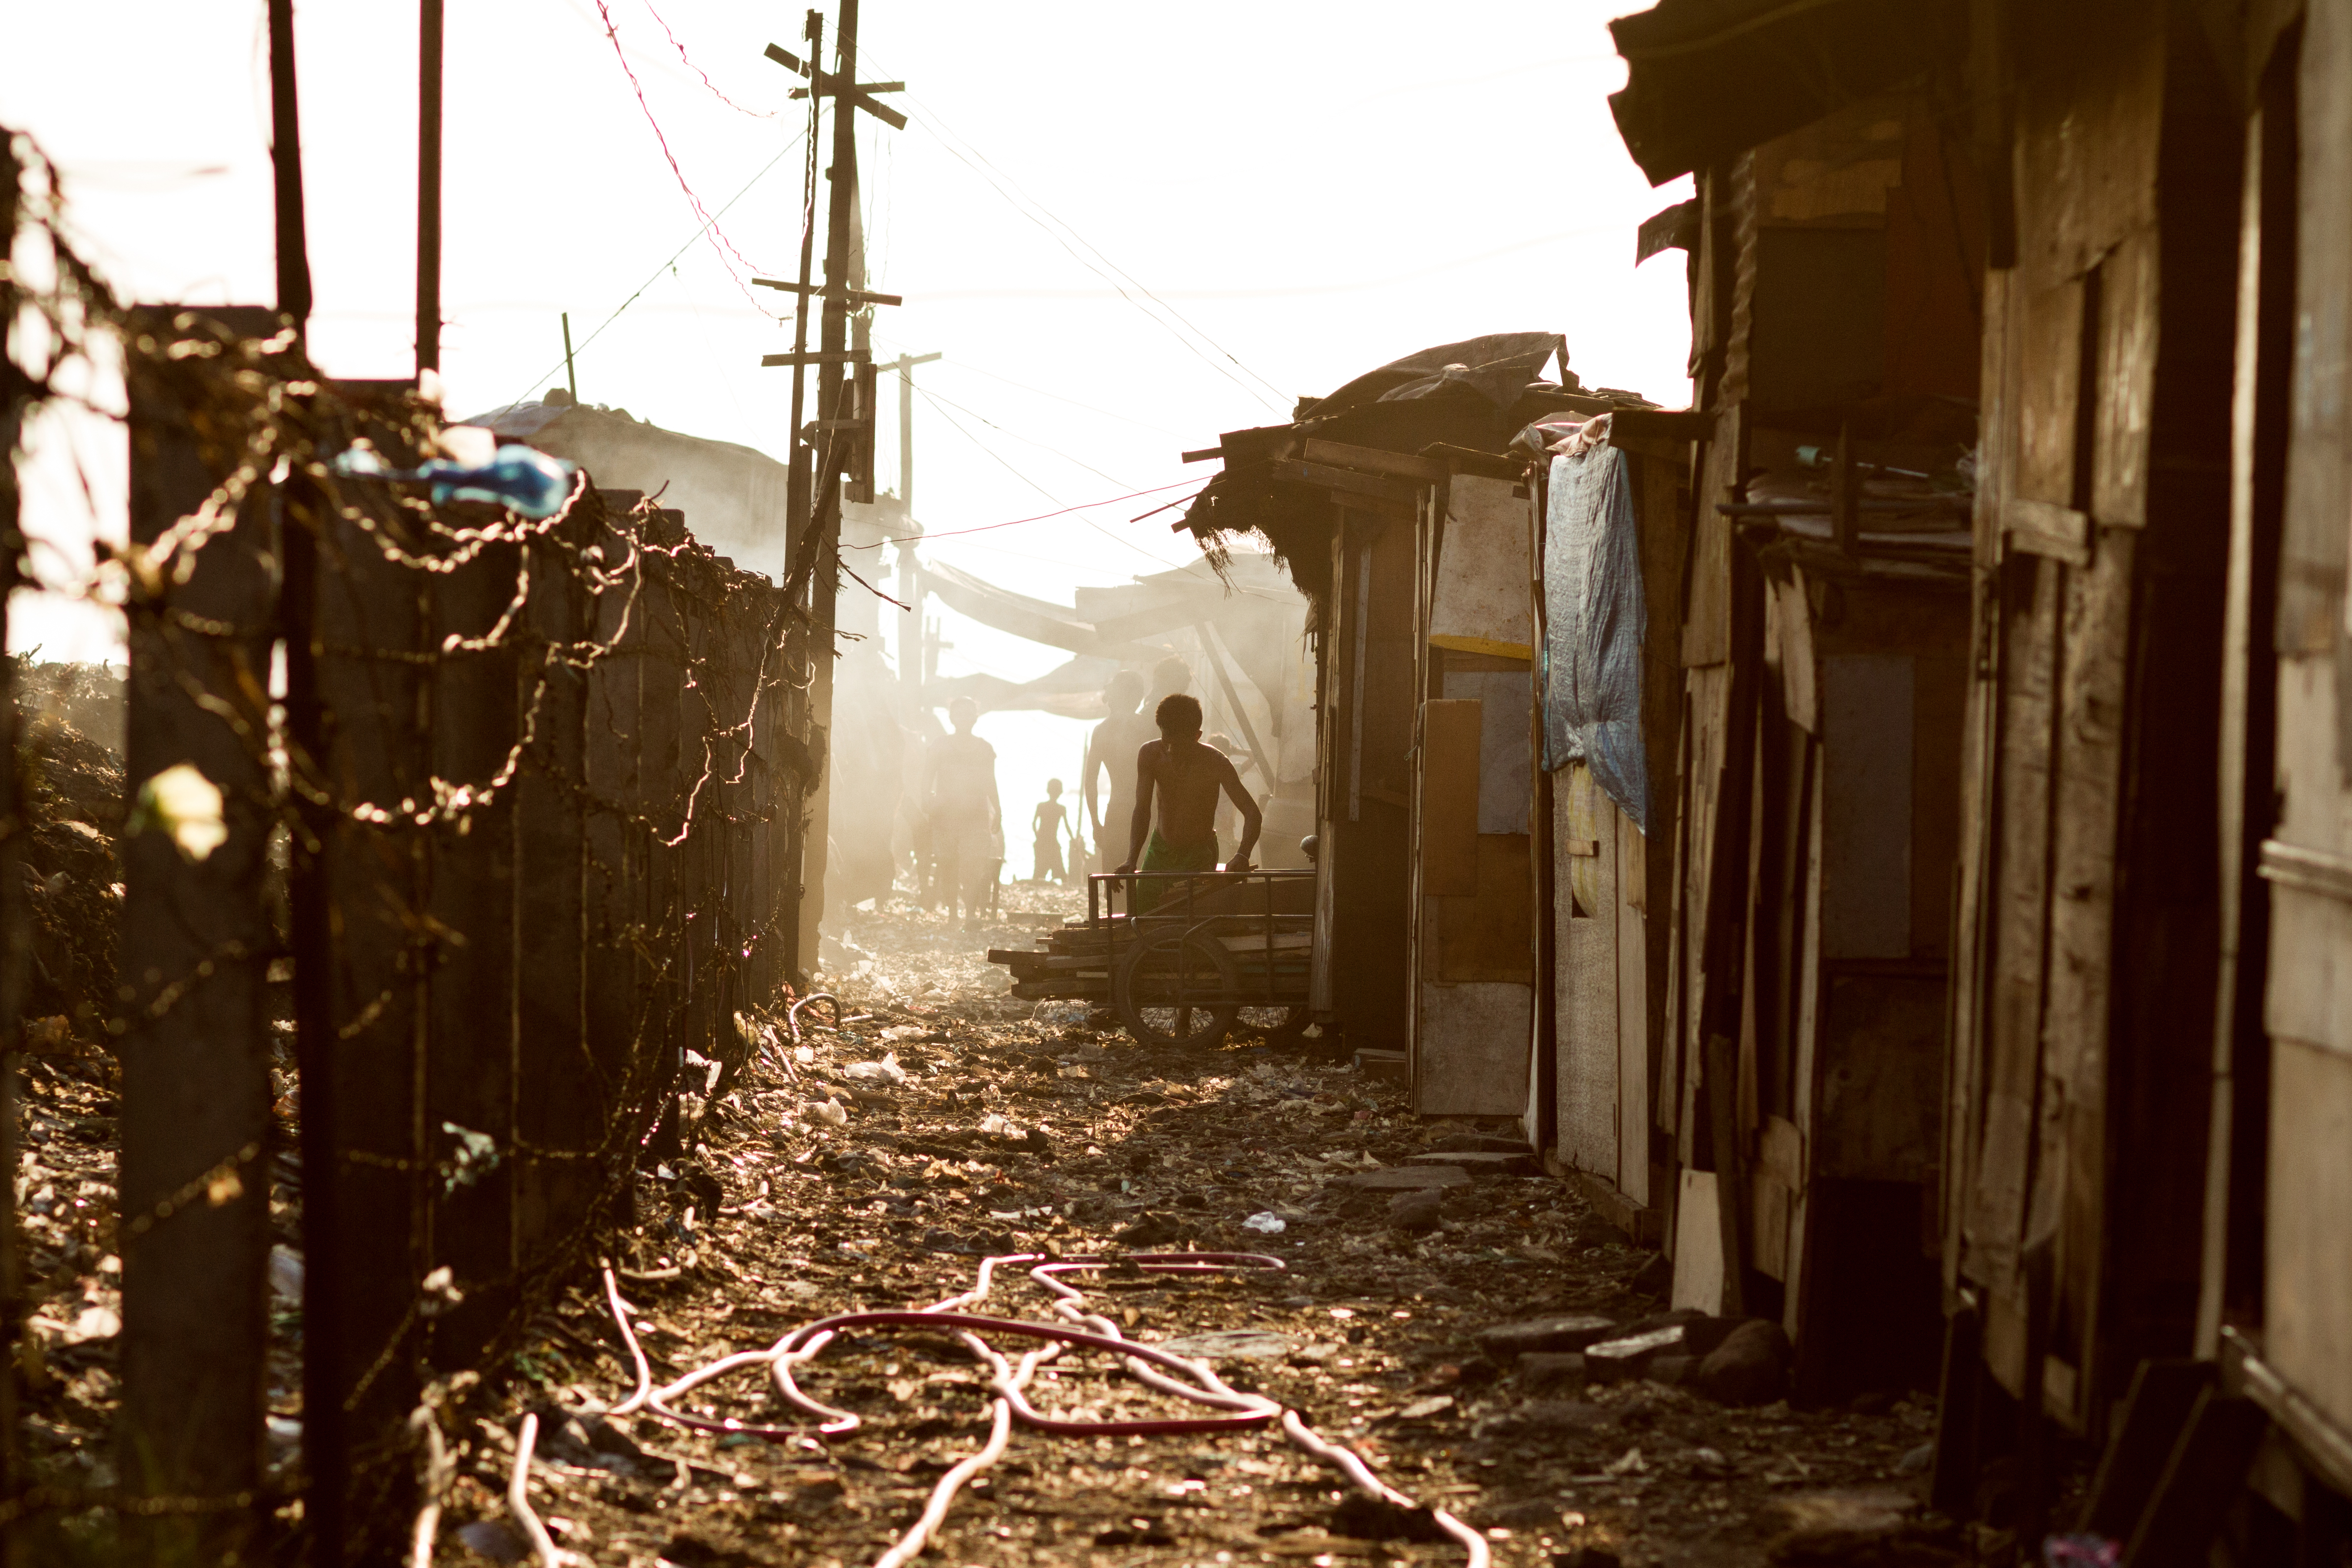 A Manilia slum. Photo by Adam Cohn on flickr. 